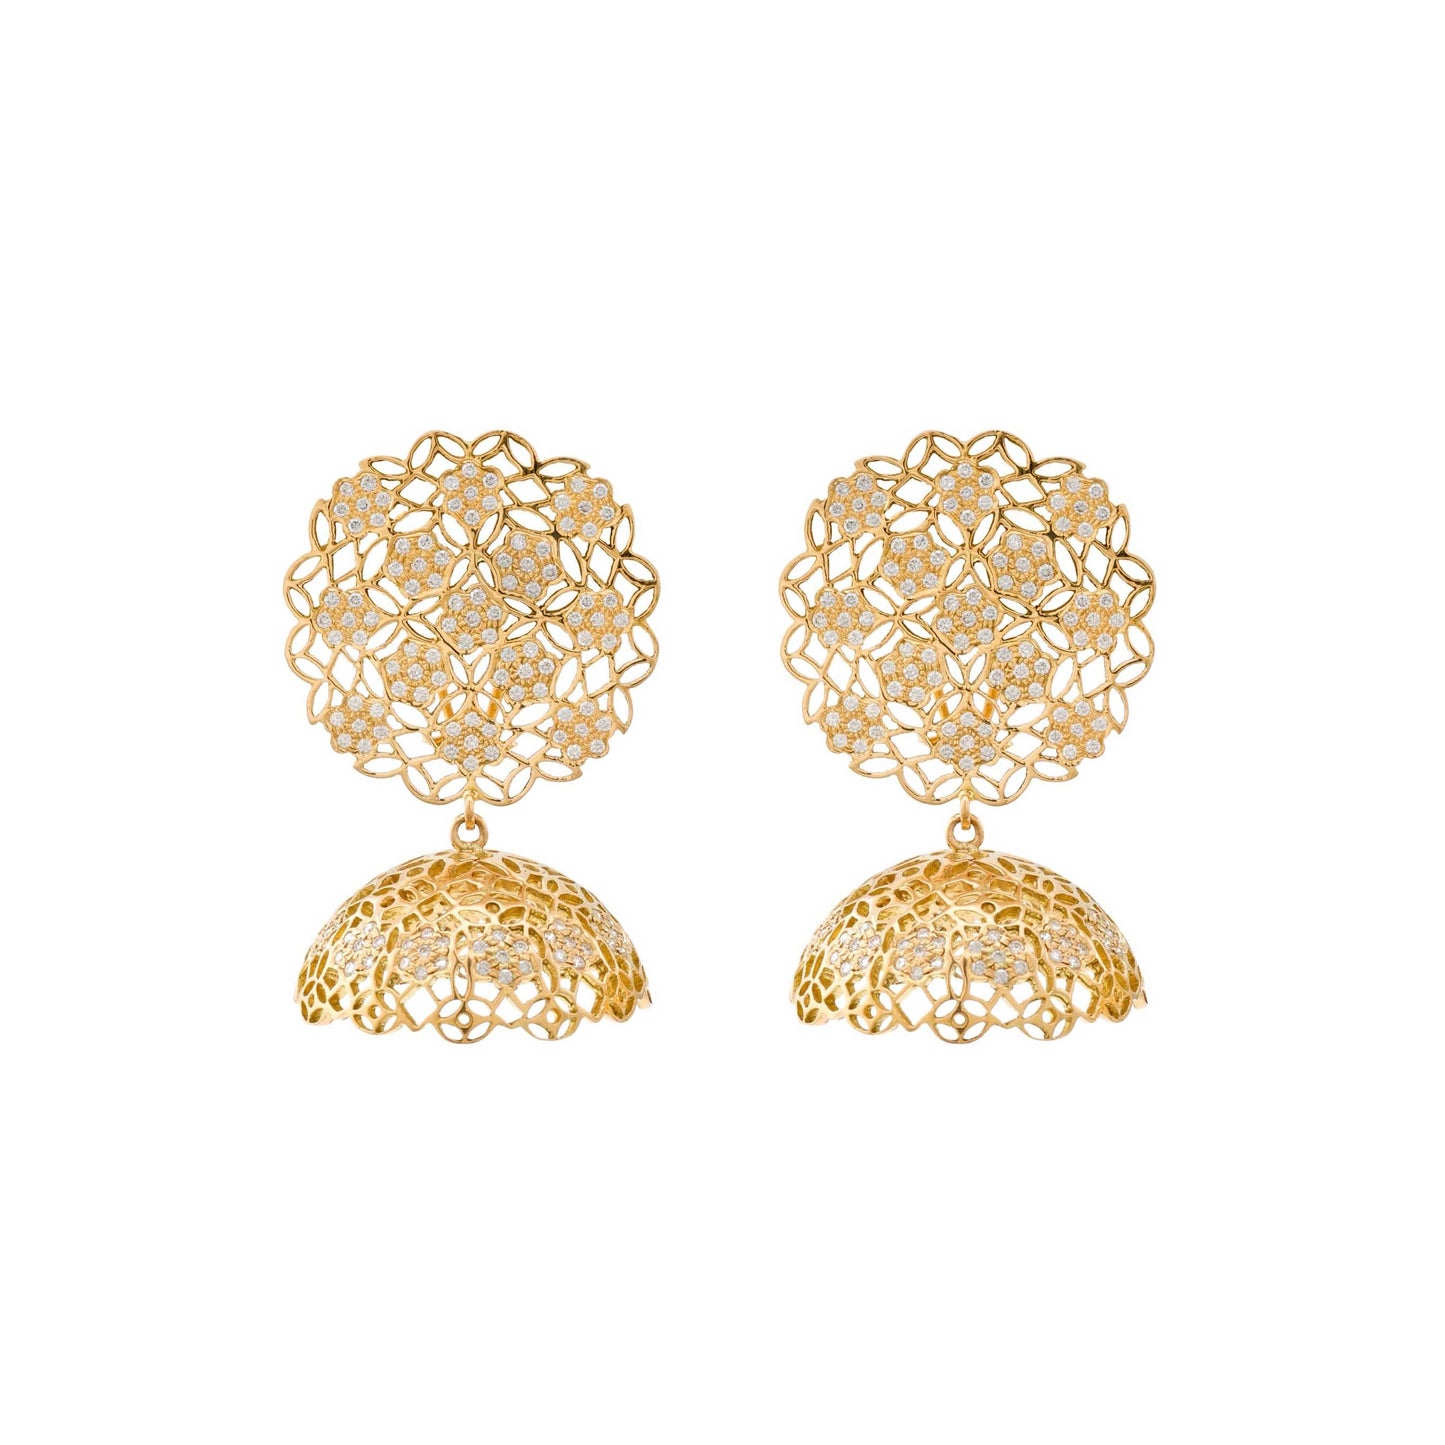 The Bipasha Lace Series Gold and Diamond Jhumka by Rasvihar